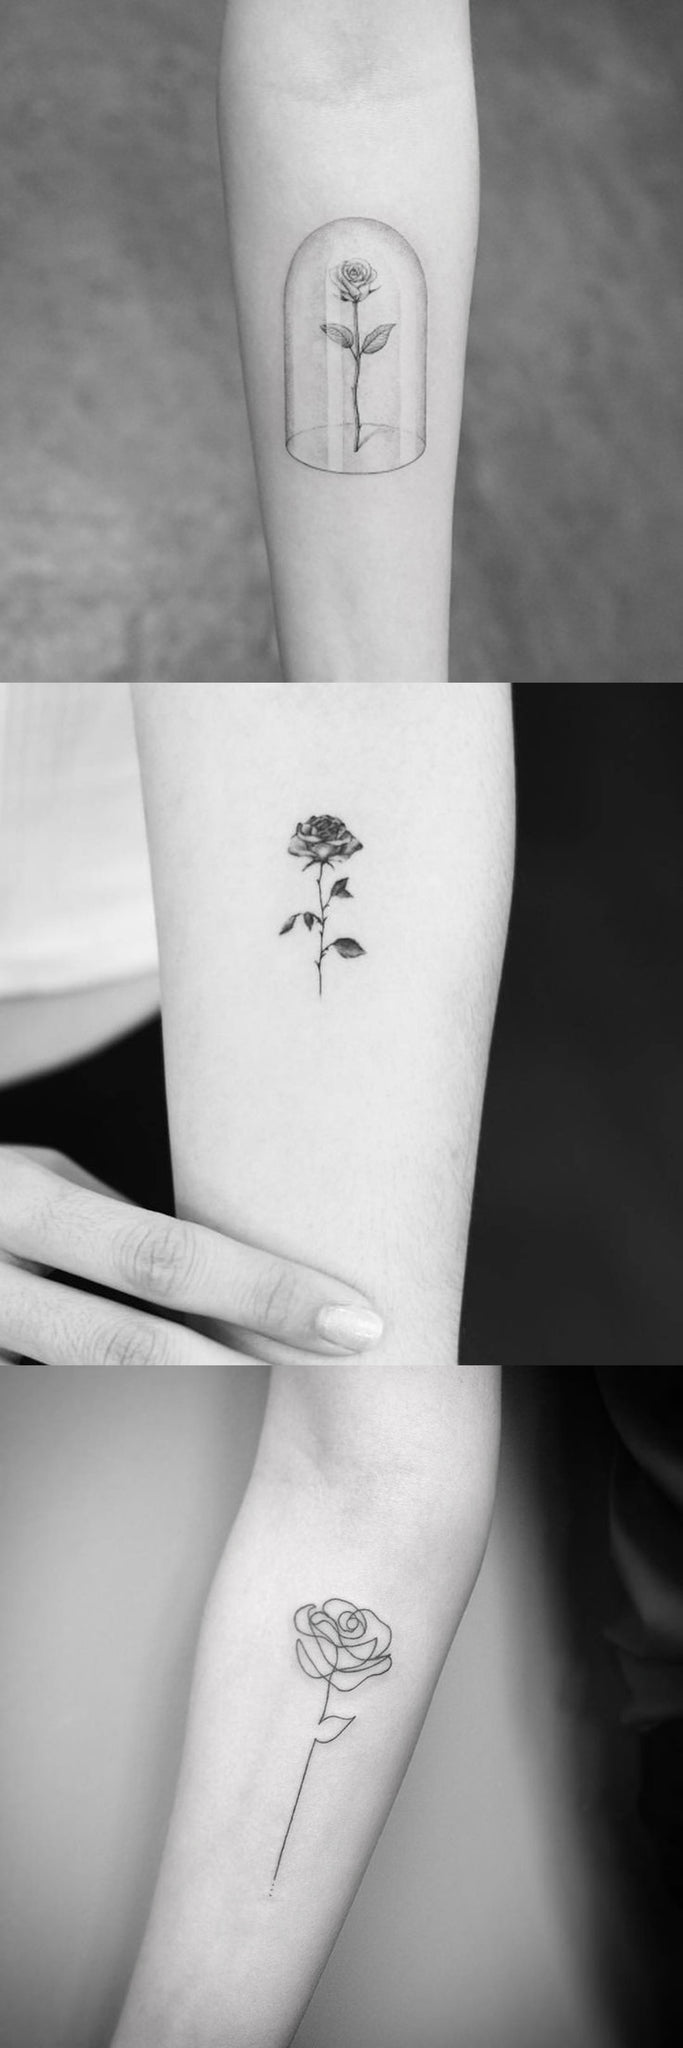 Simple Rose Arm Tattoo Ideas at MyBodiArt.com - Black and White Floral Flower Bicep Wrist Tatt Design